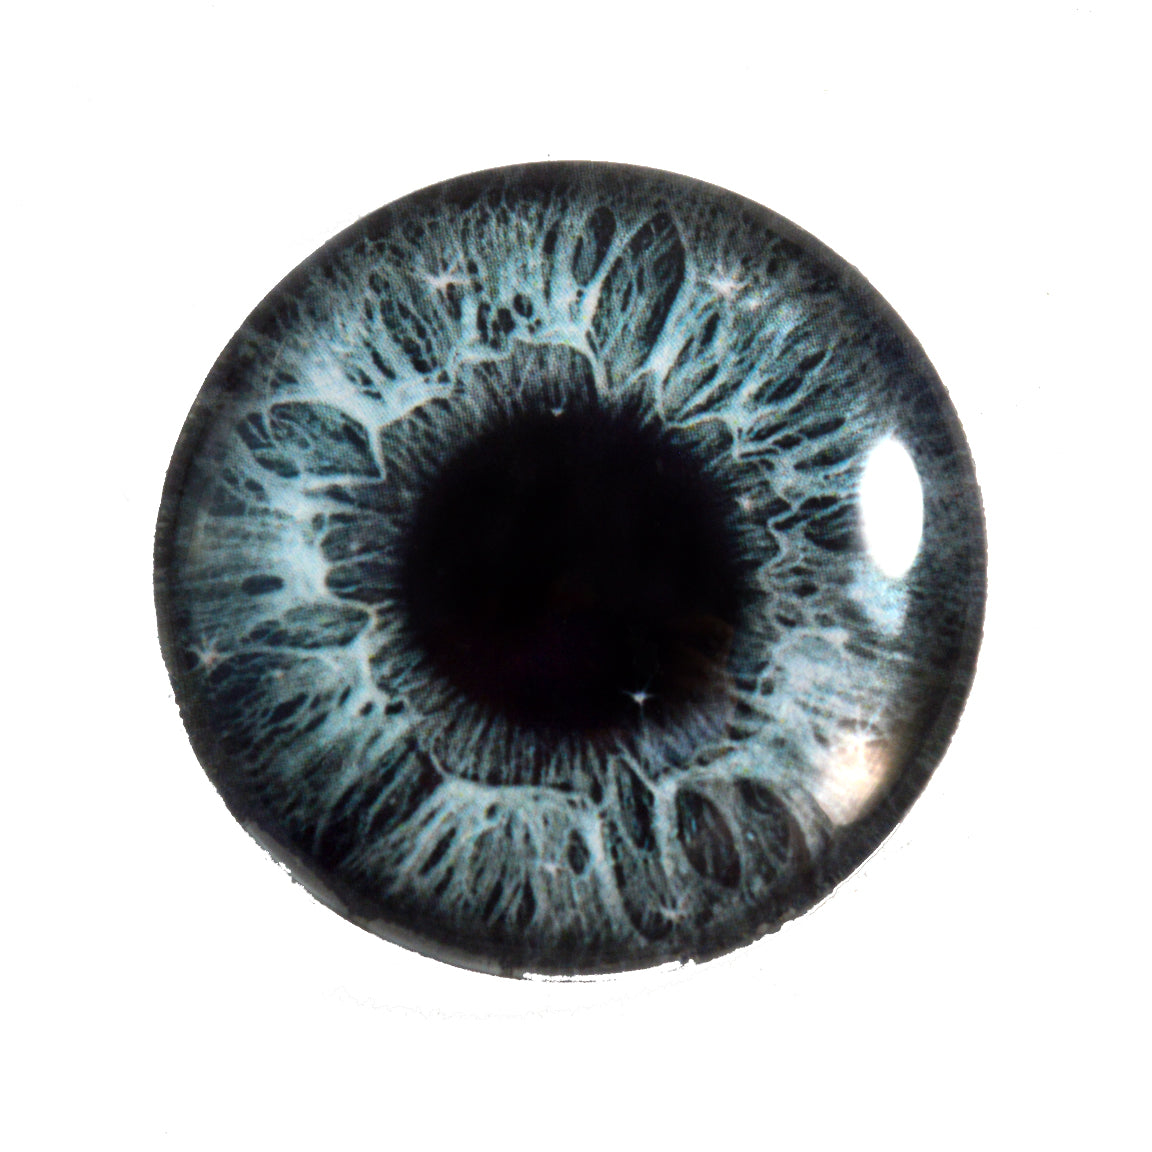 14mm Oval Glass Eyes - Grey